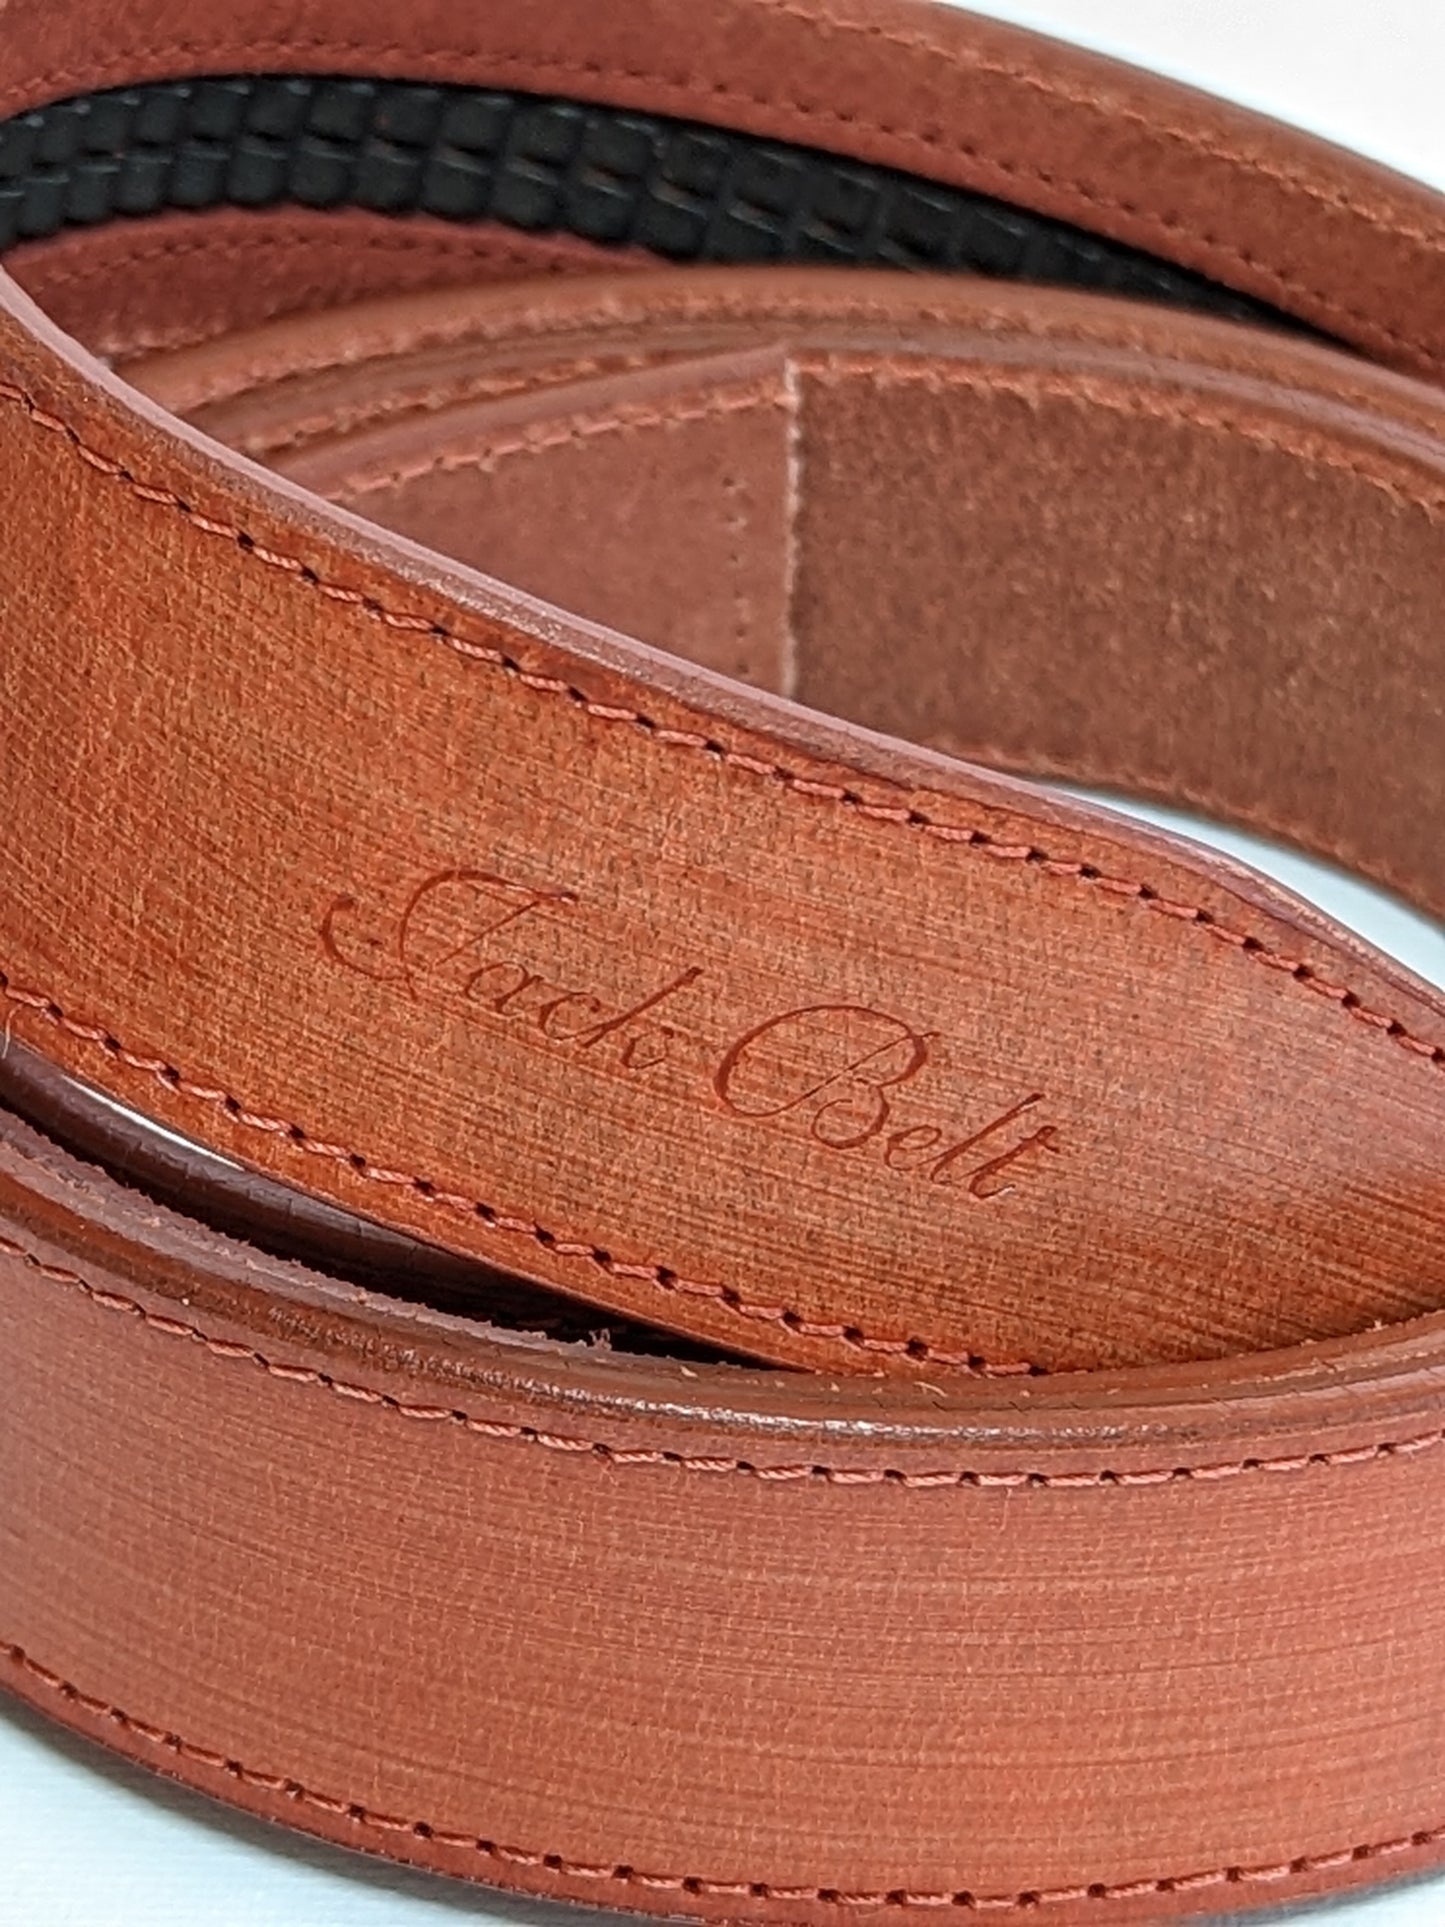 Full Grain Leather 'Outback Tan' IOTAN